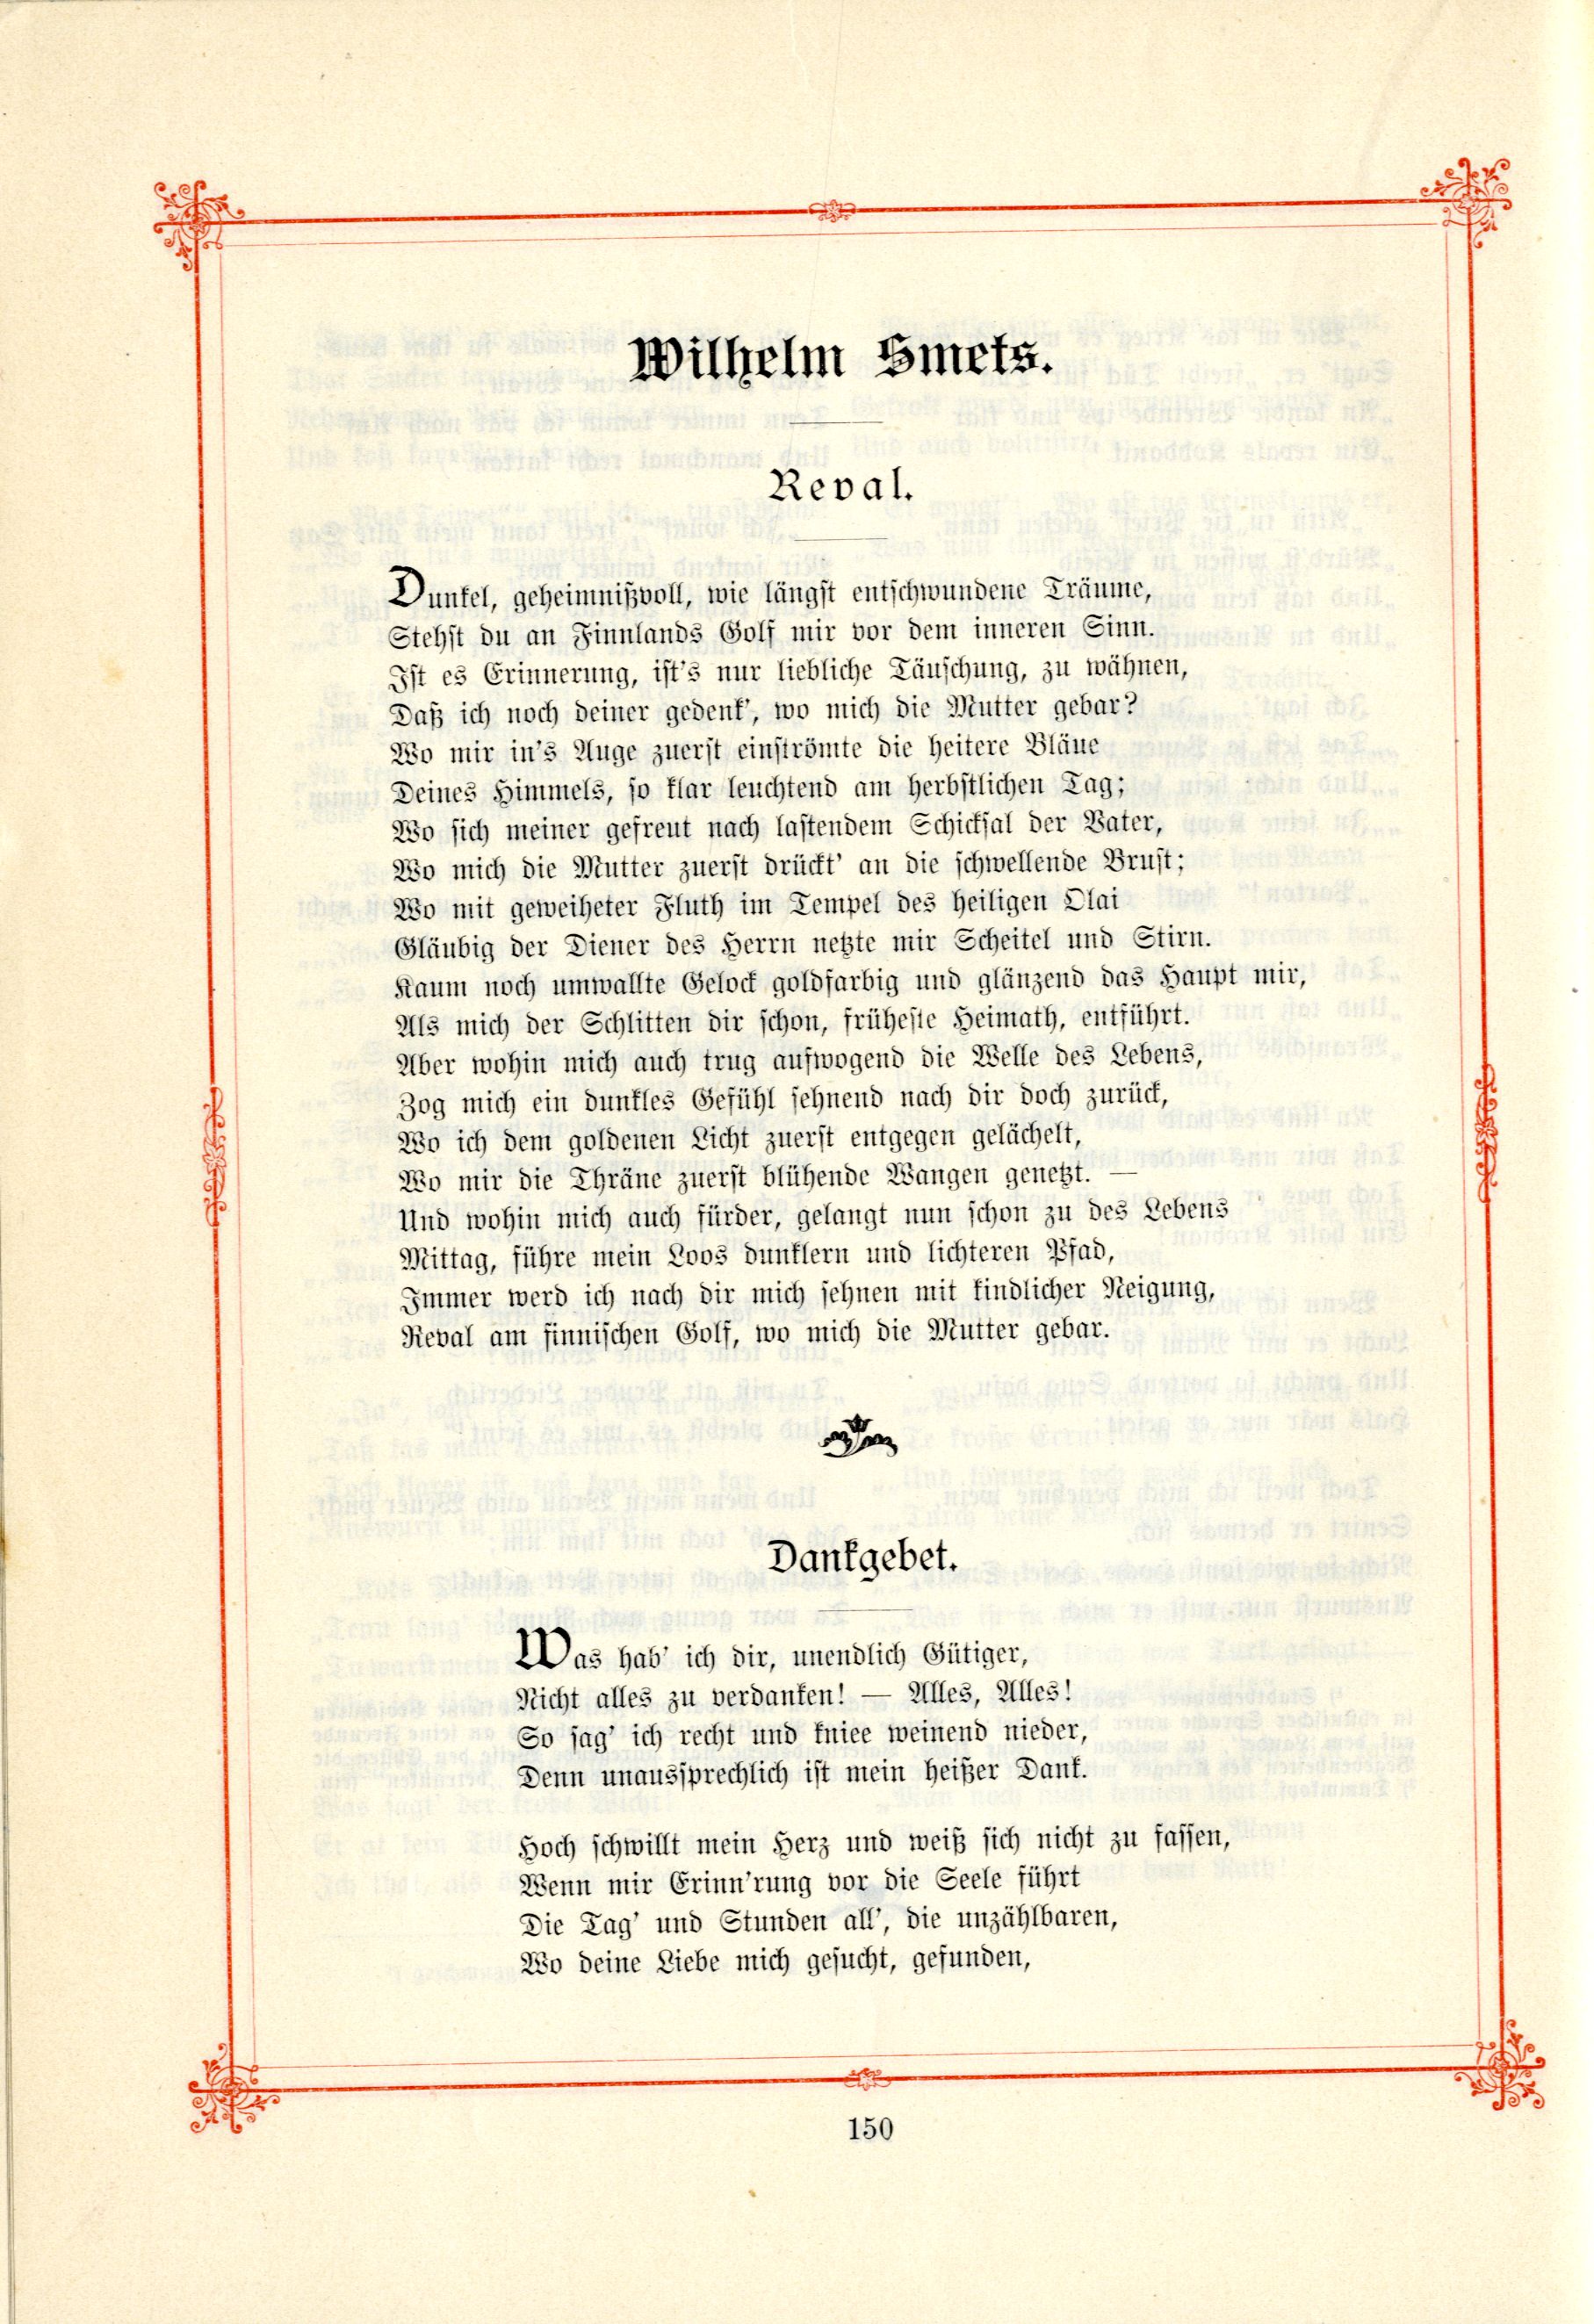 Reval (1895) | 1. (150) Основной текст